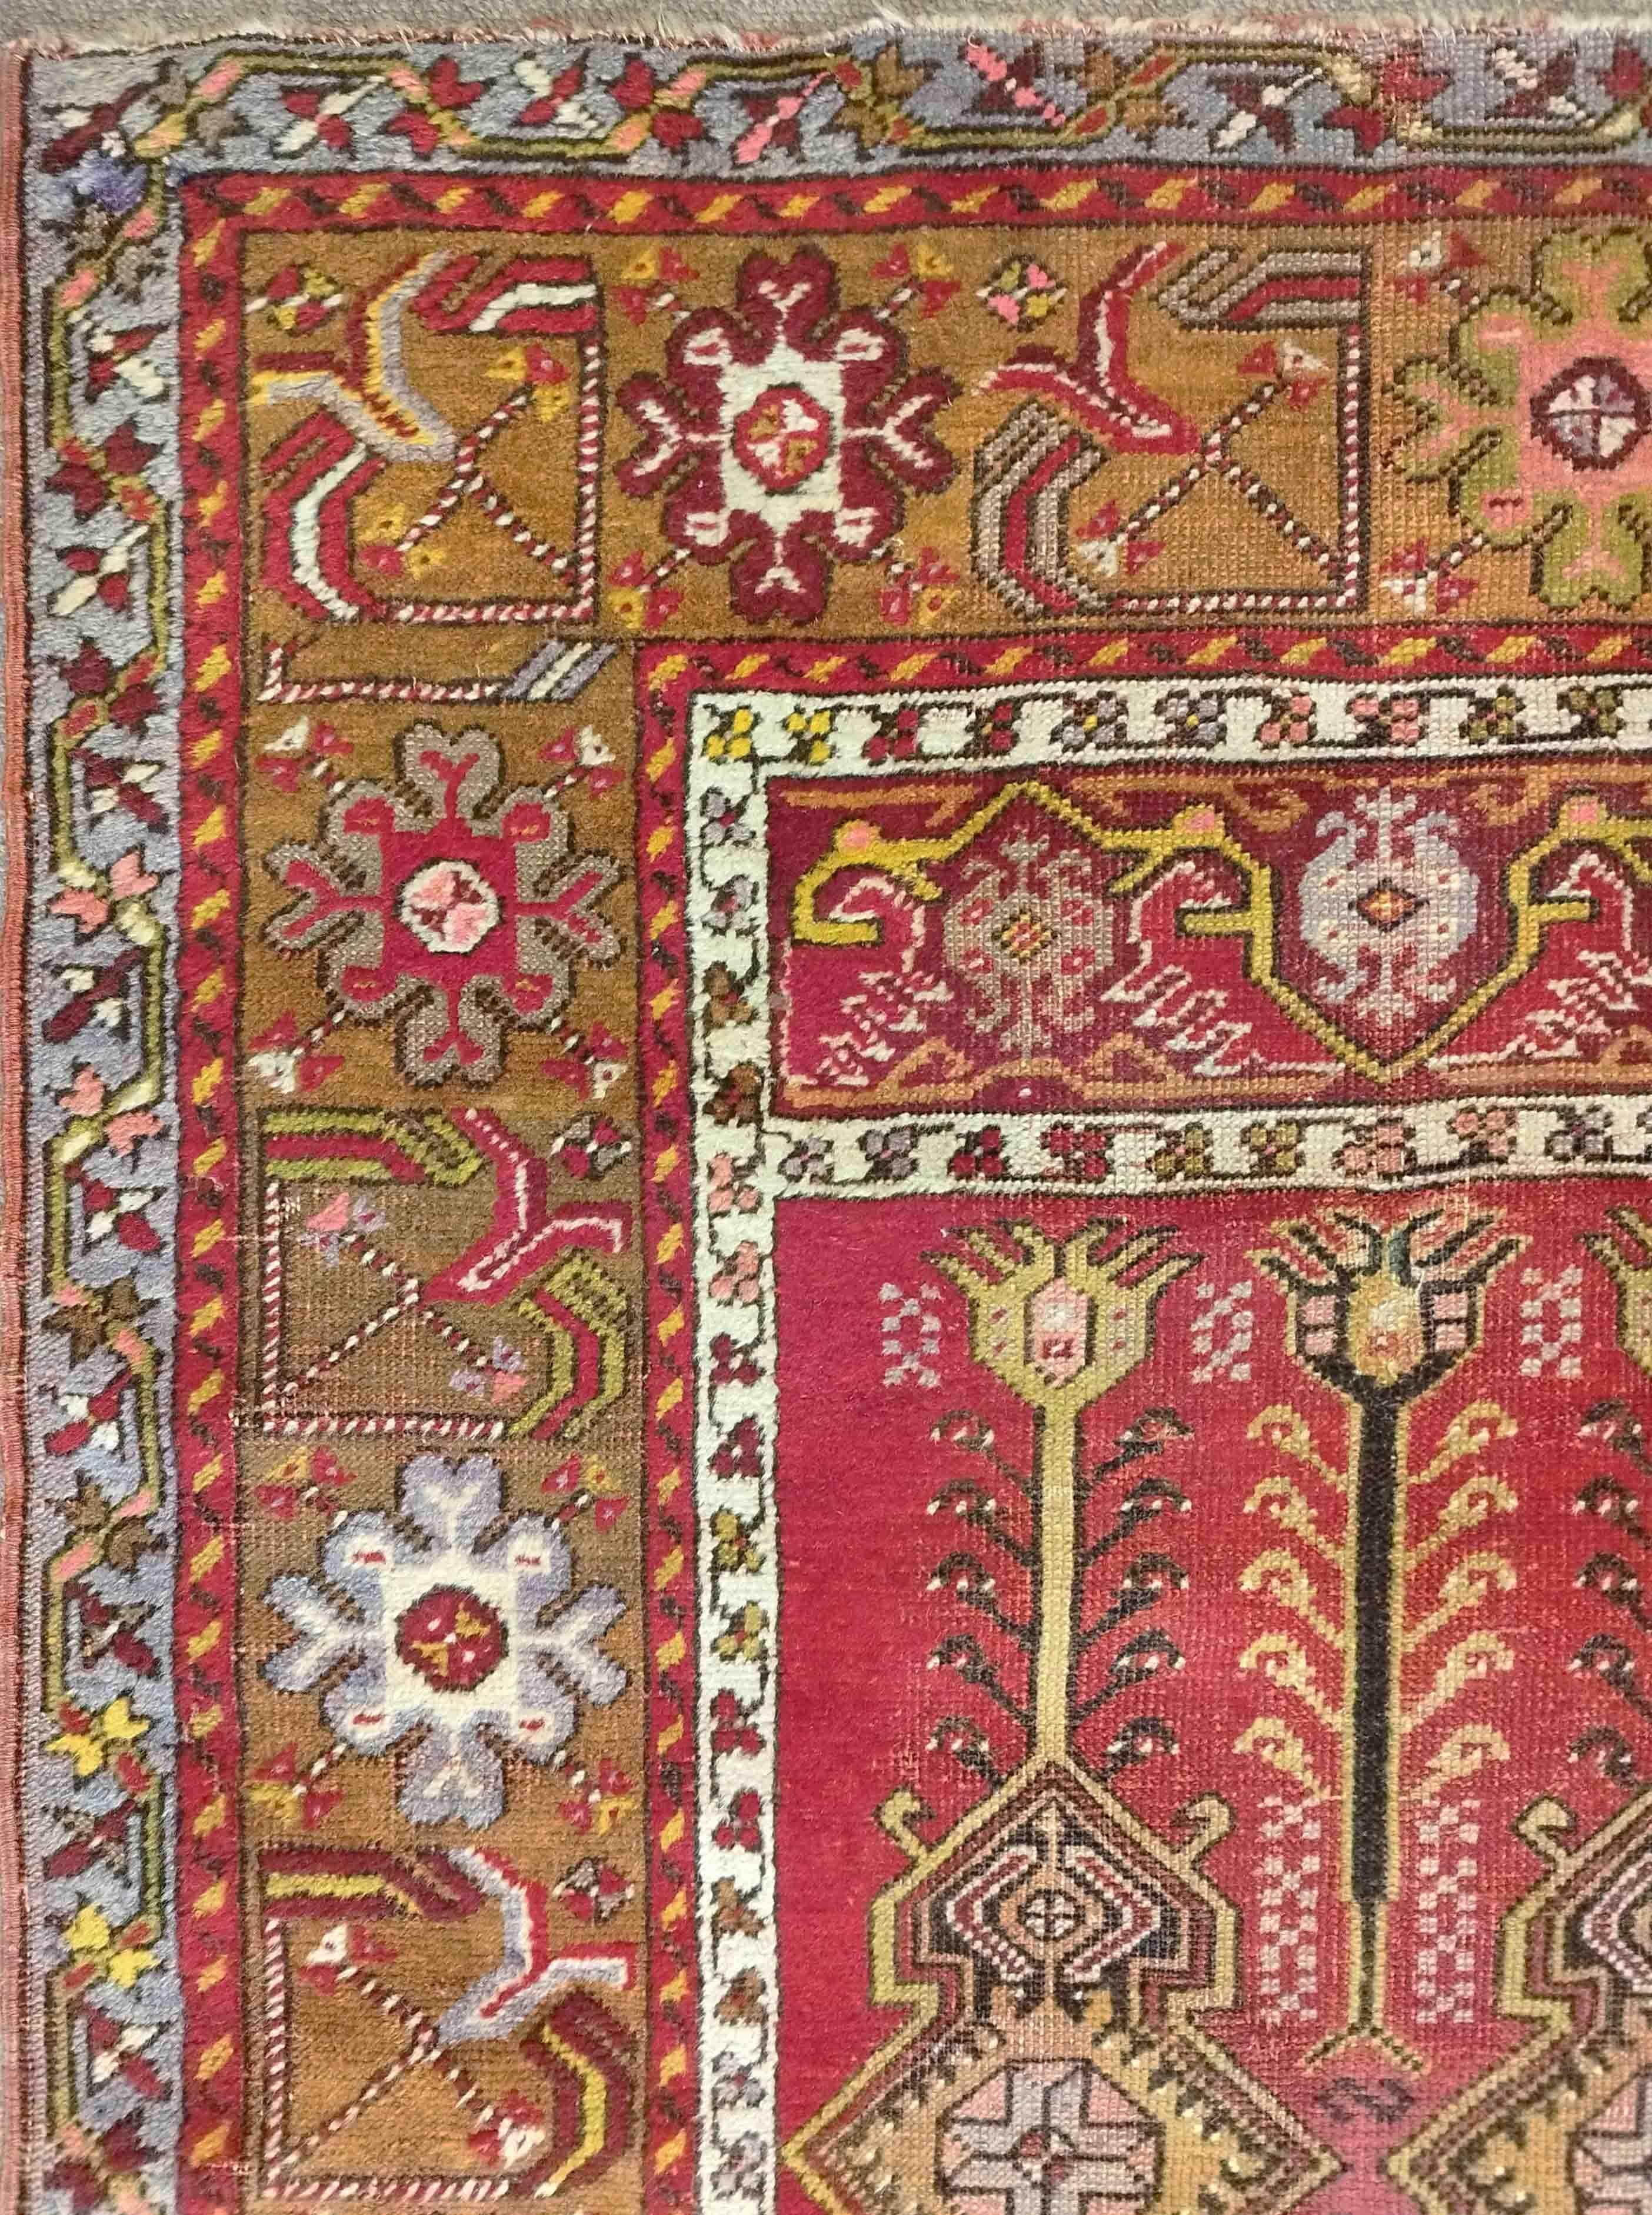  Kirchir Turkish Carpet, 19th Century - N° 728 For Sale 5